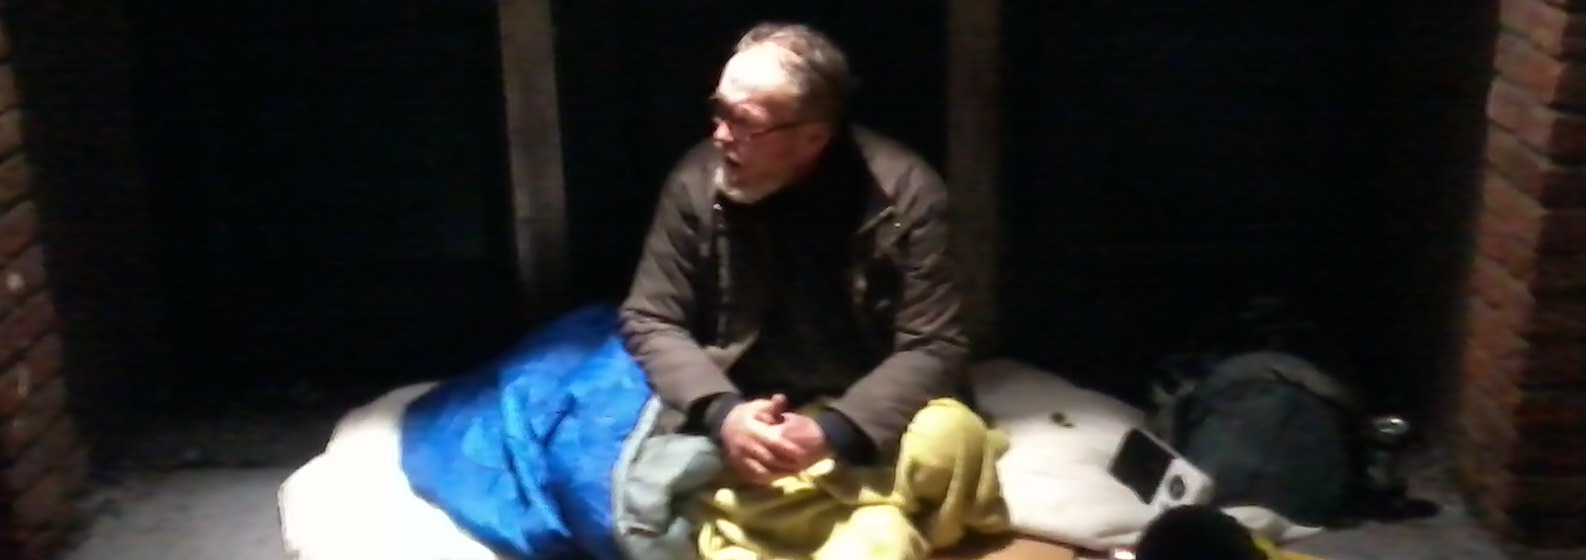 ‘Room at the inn’ for homeless man as local angel intervenes